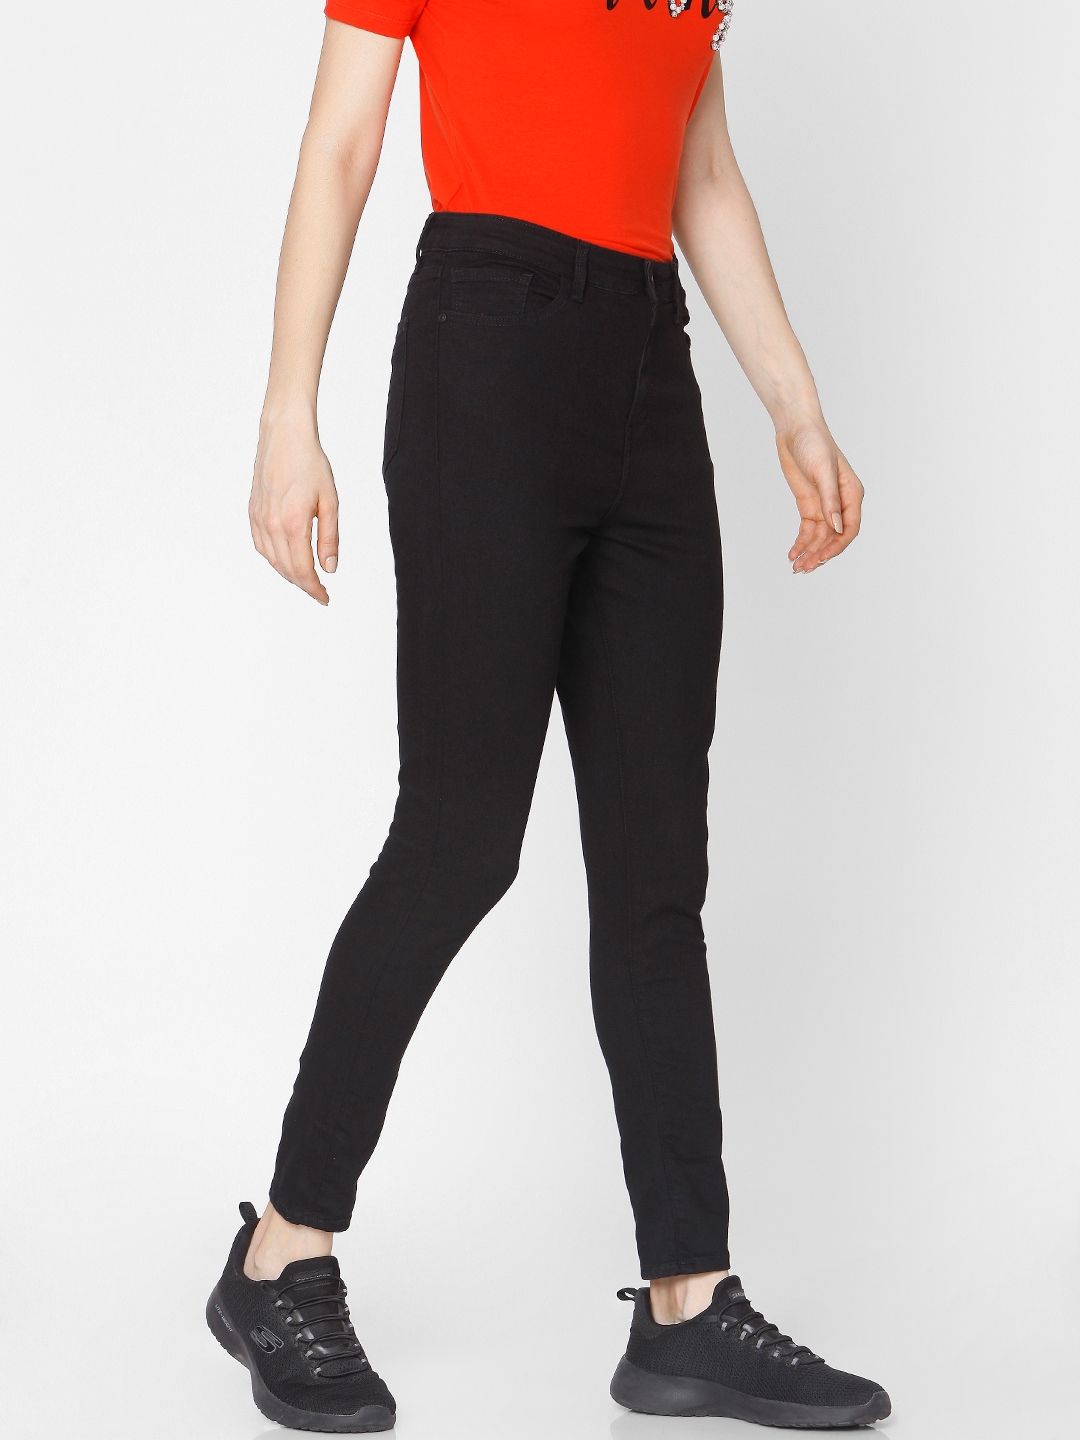 spykar | Women's Black Cotton Solid Slim Jeans 3